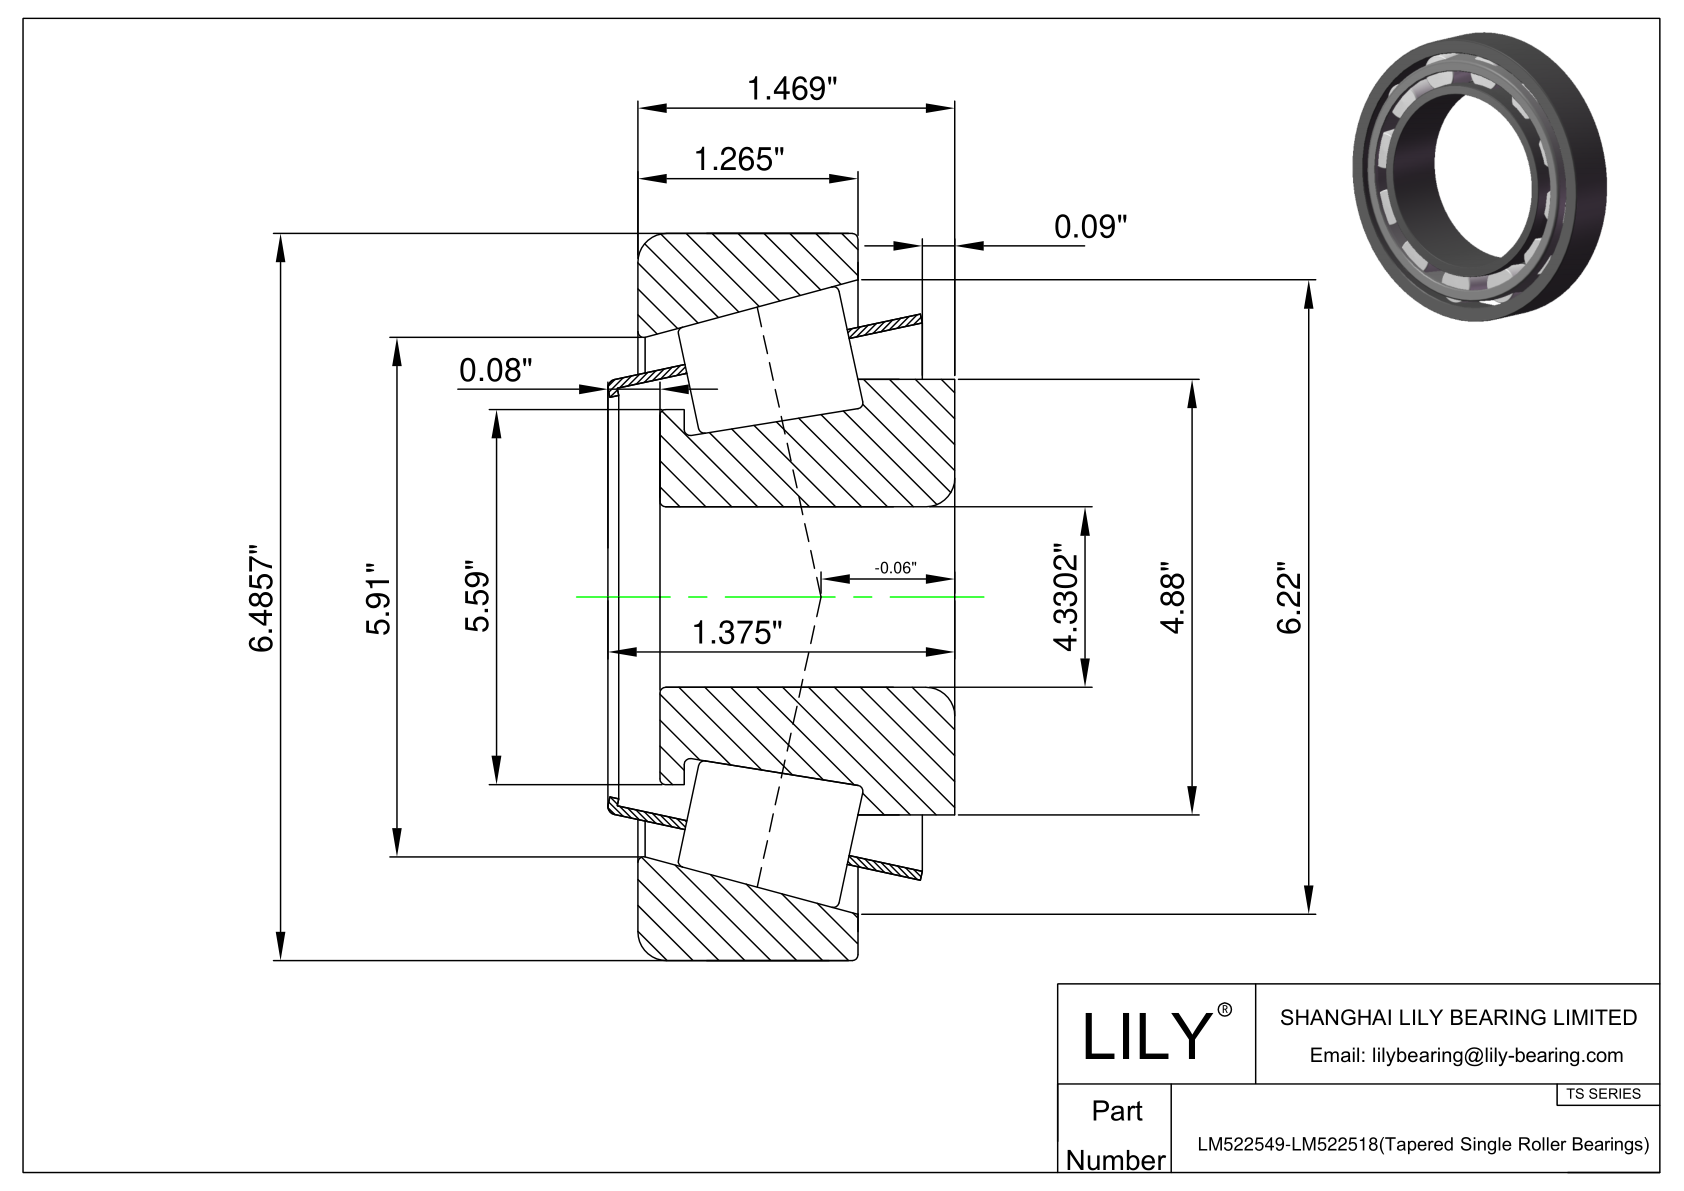 LM522549-LM522518 TS系列(圆锥单滚子轴承)(英制) CAD图形